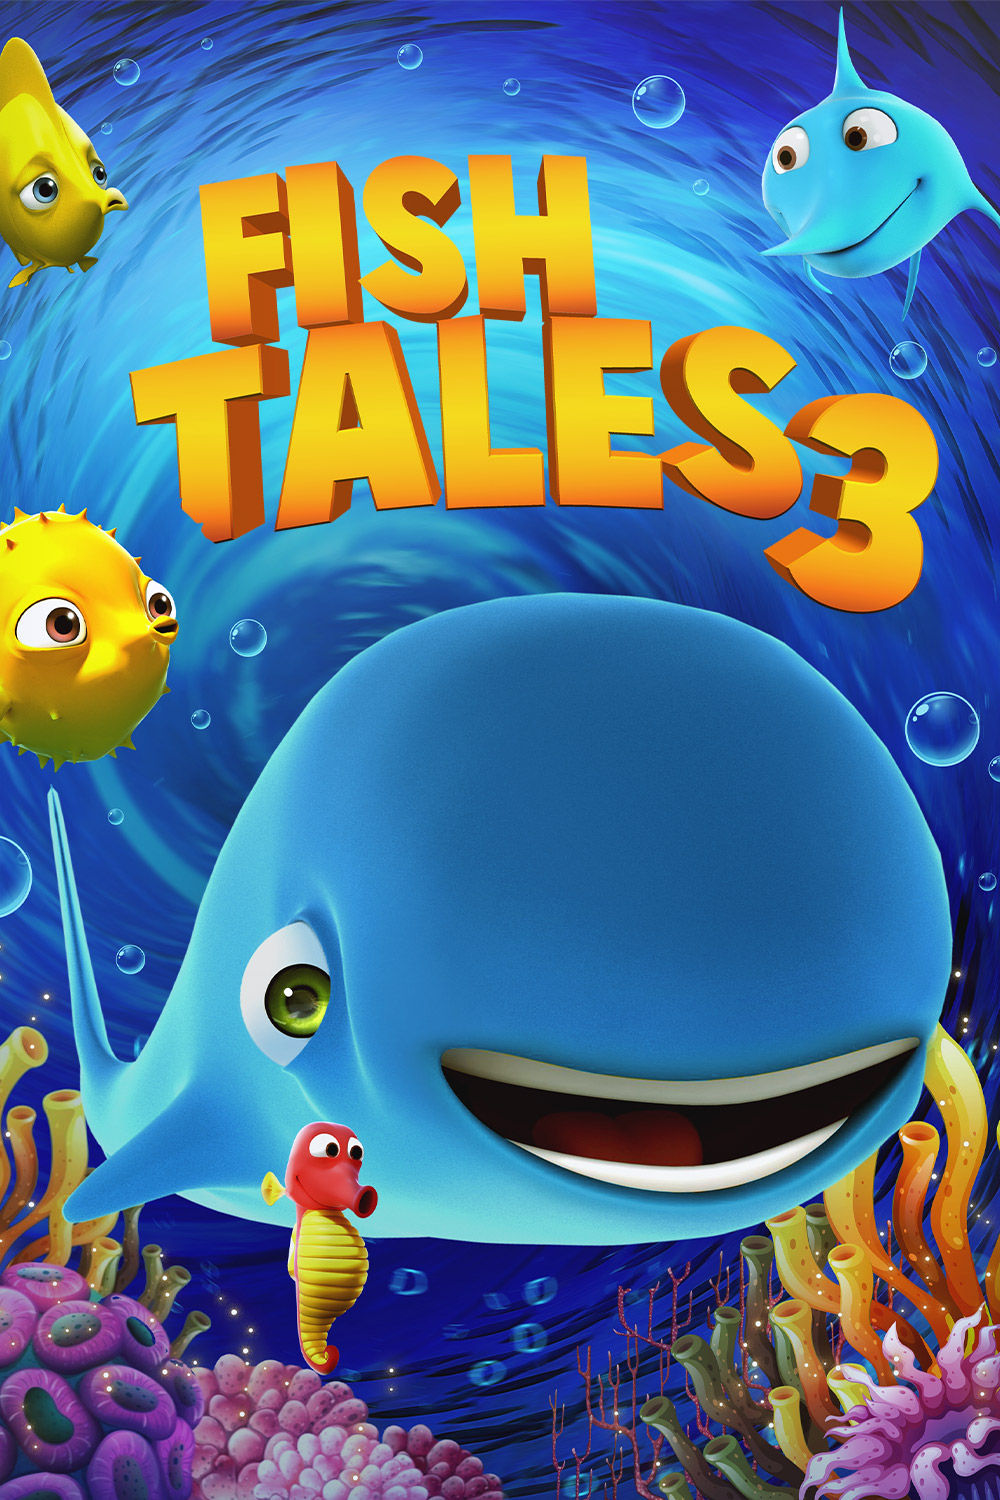 Watch Fish Tales 3 Online